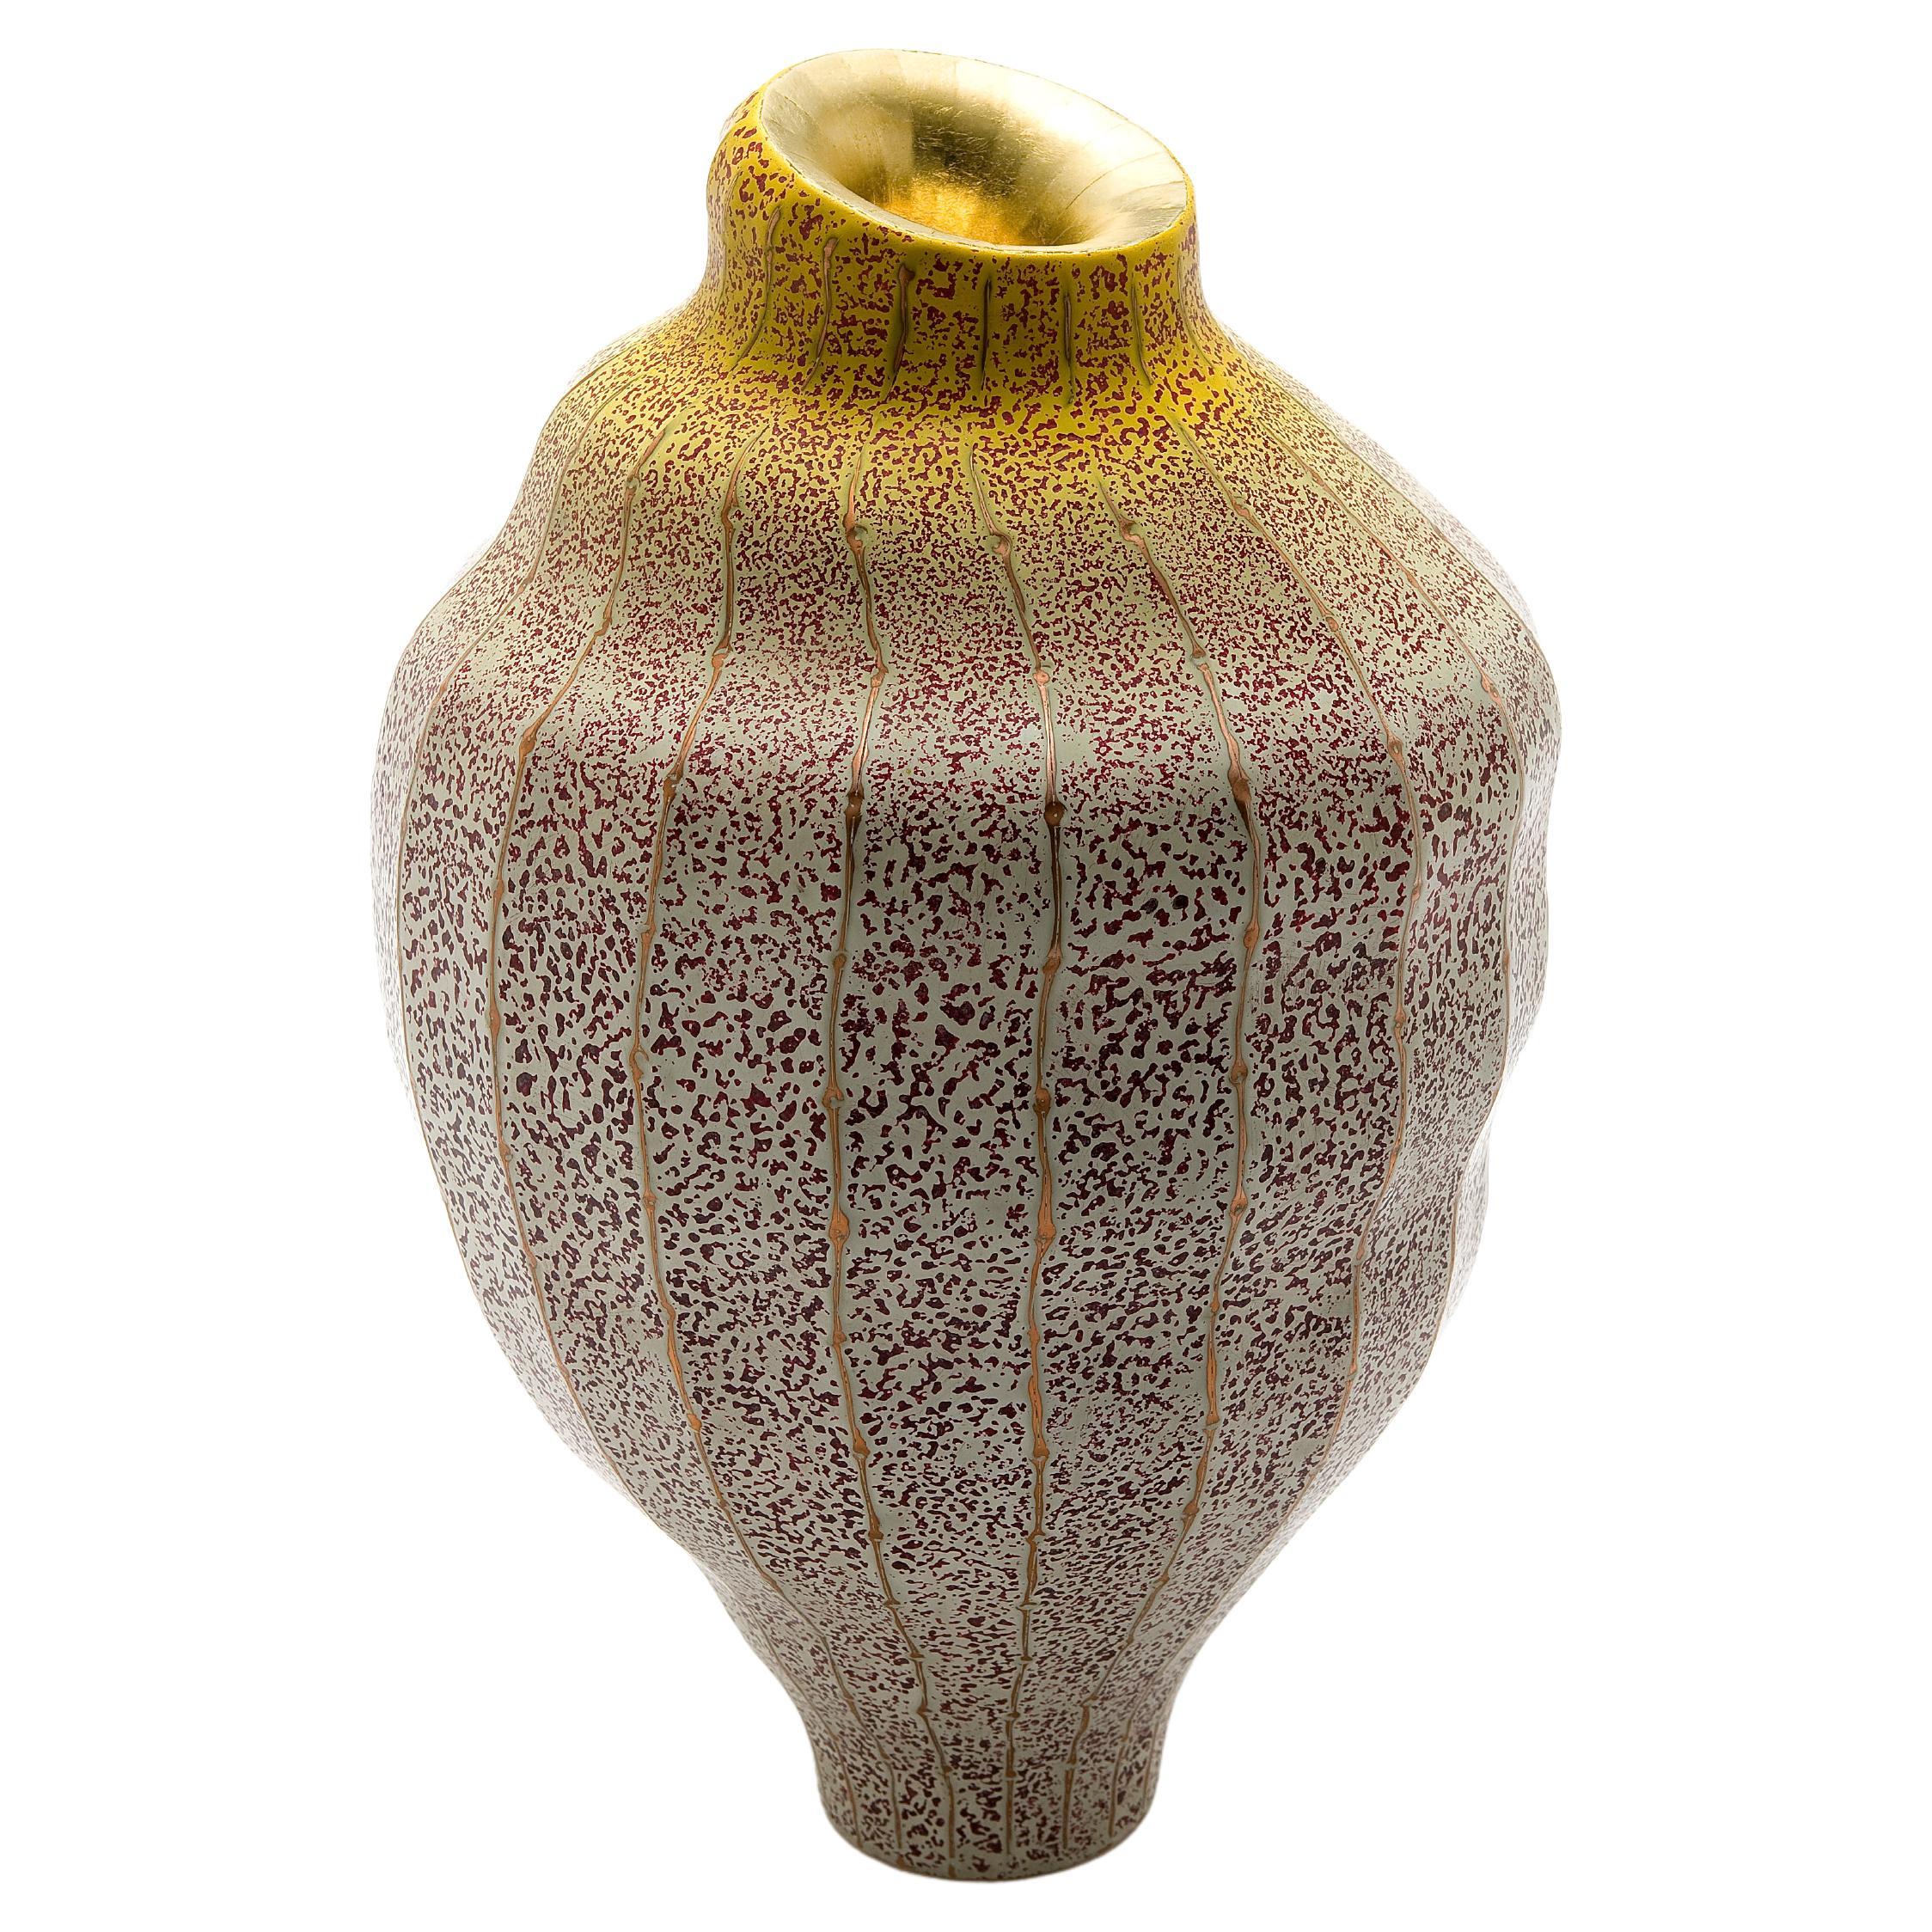 21th Century Sculptural Vase "Transition Ortus" by Jaiik Lee Copper Gold Leaf